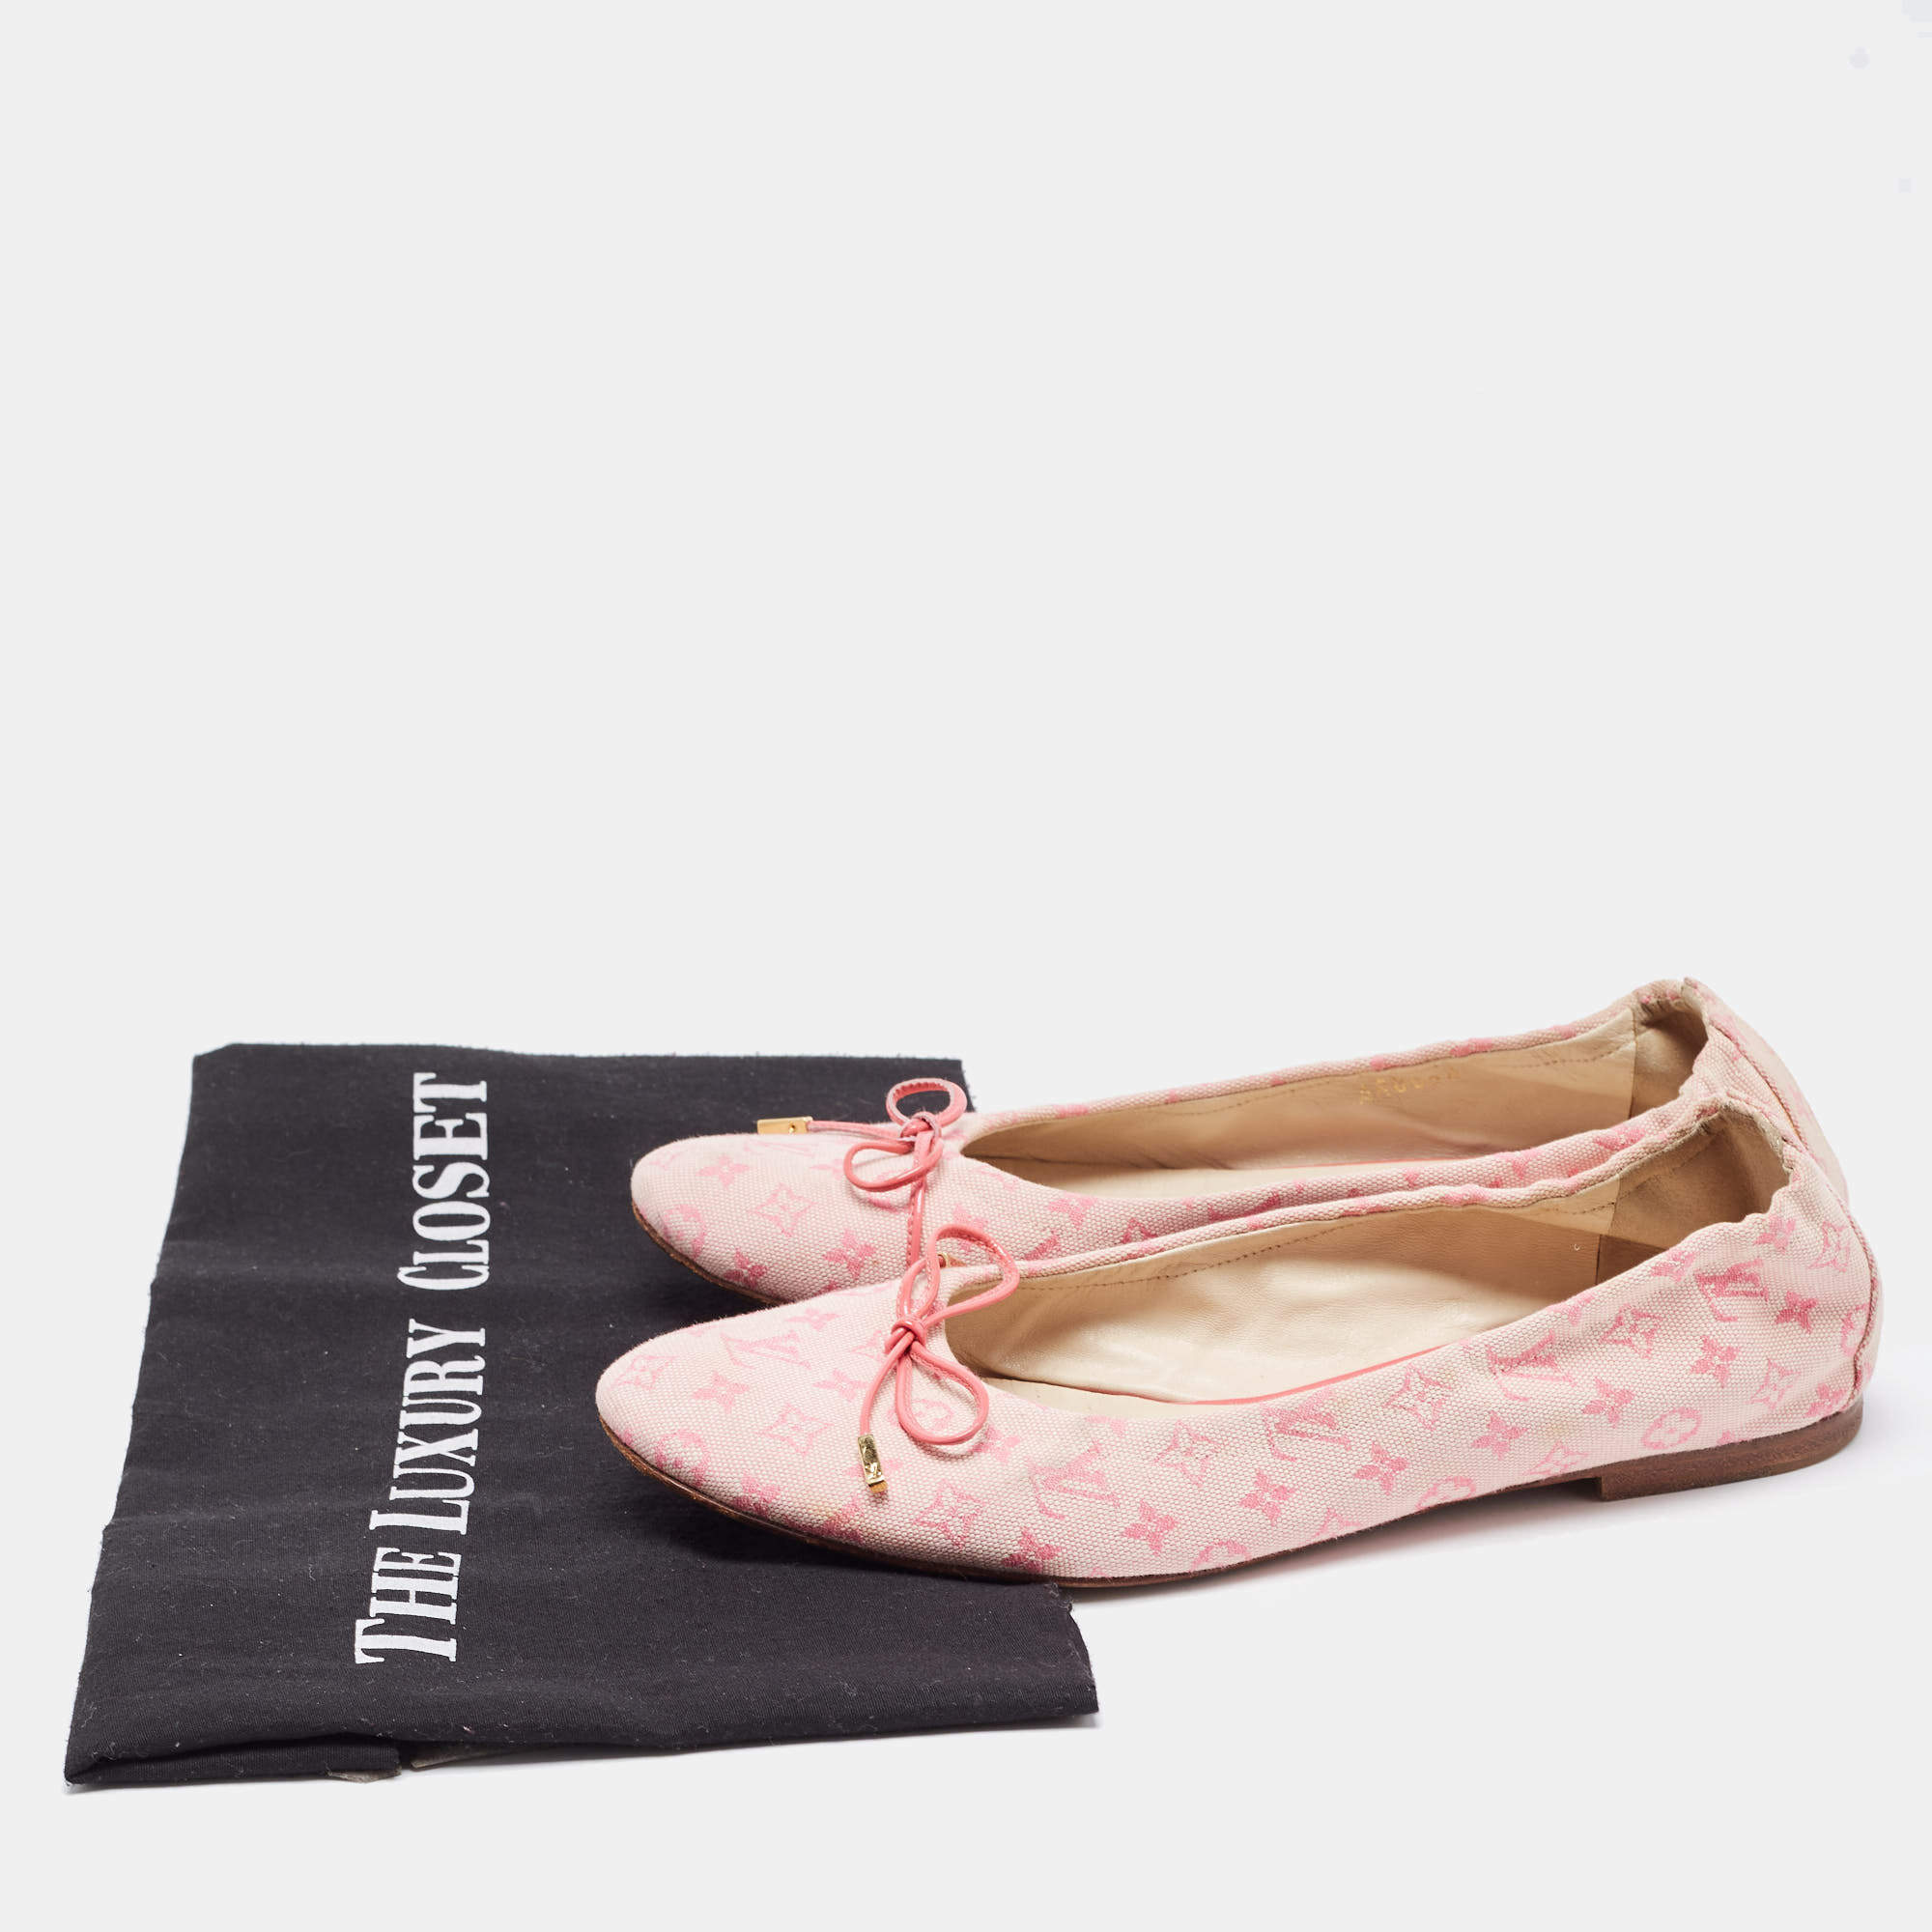 Louis Vuitton Monogram Canvas Flirty Ballerina Flats - Size 6 / 36